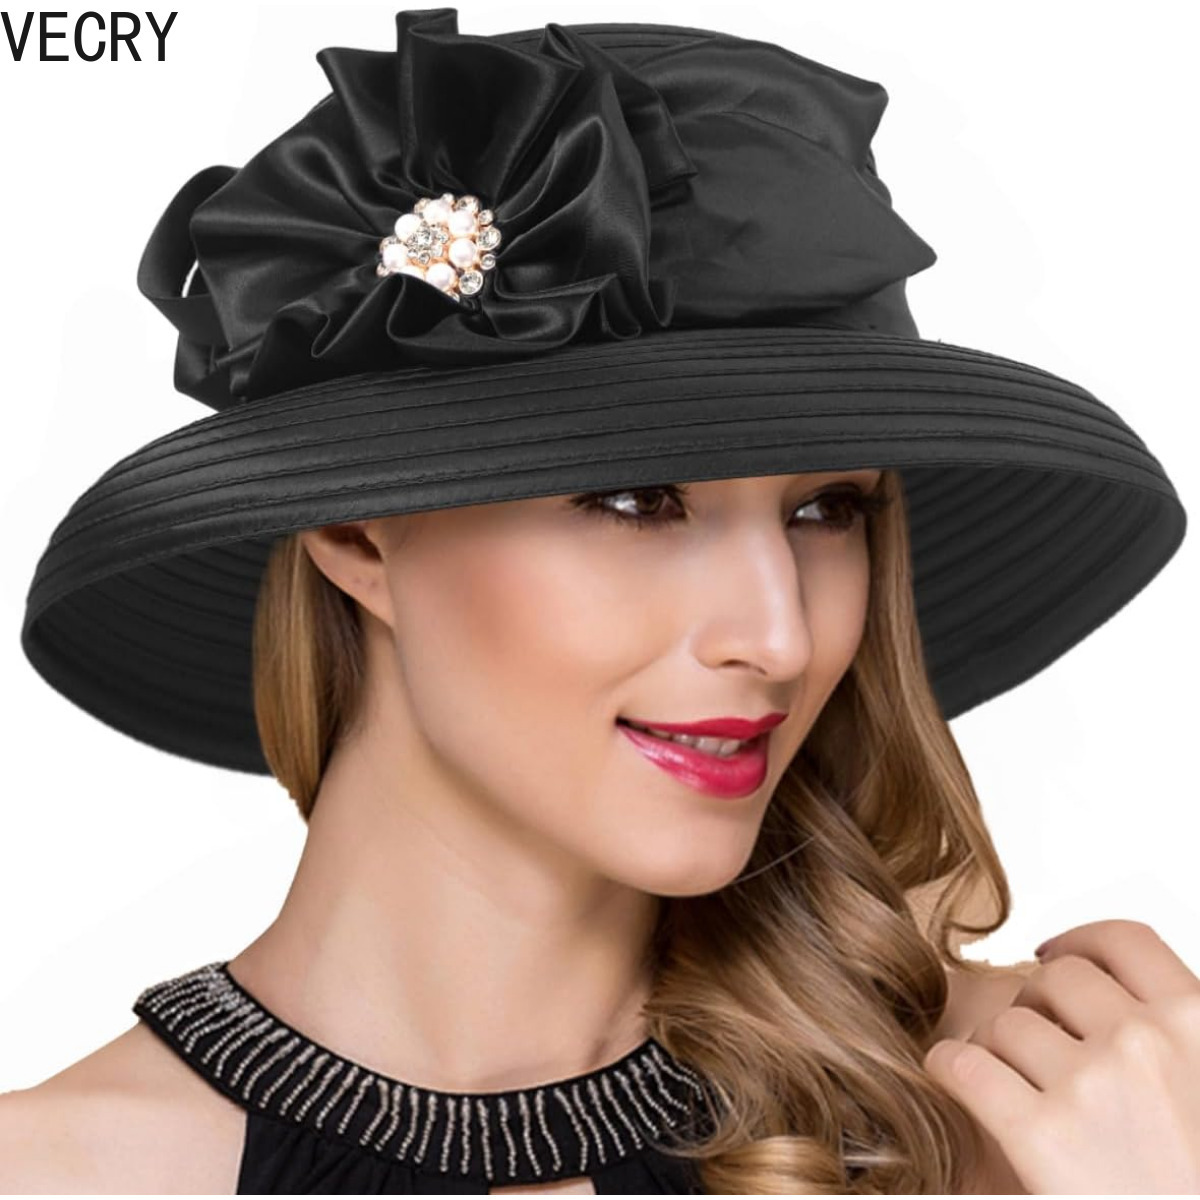 

Vecry Women Kentucky Derby Church Dress Cloche Hat Fascinator Wedding Bucket Hat